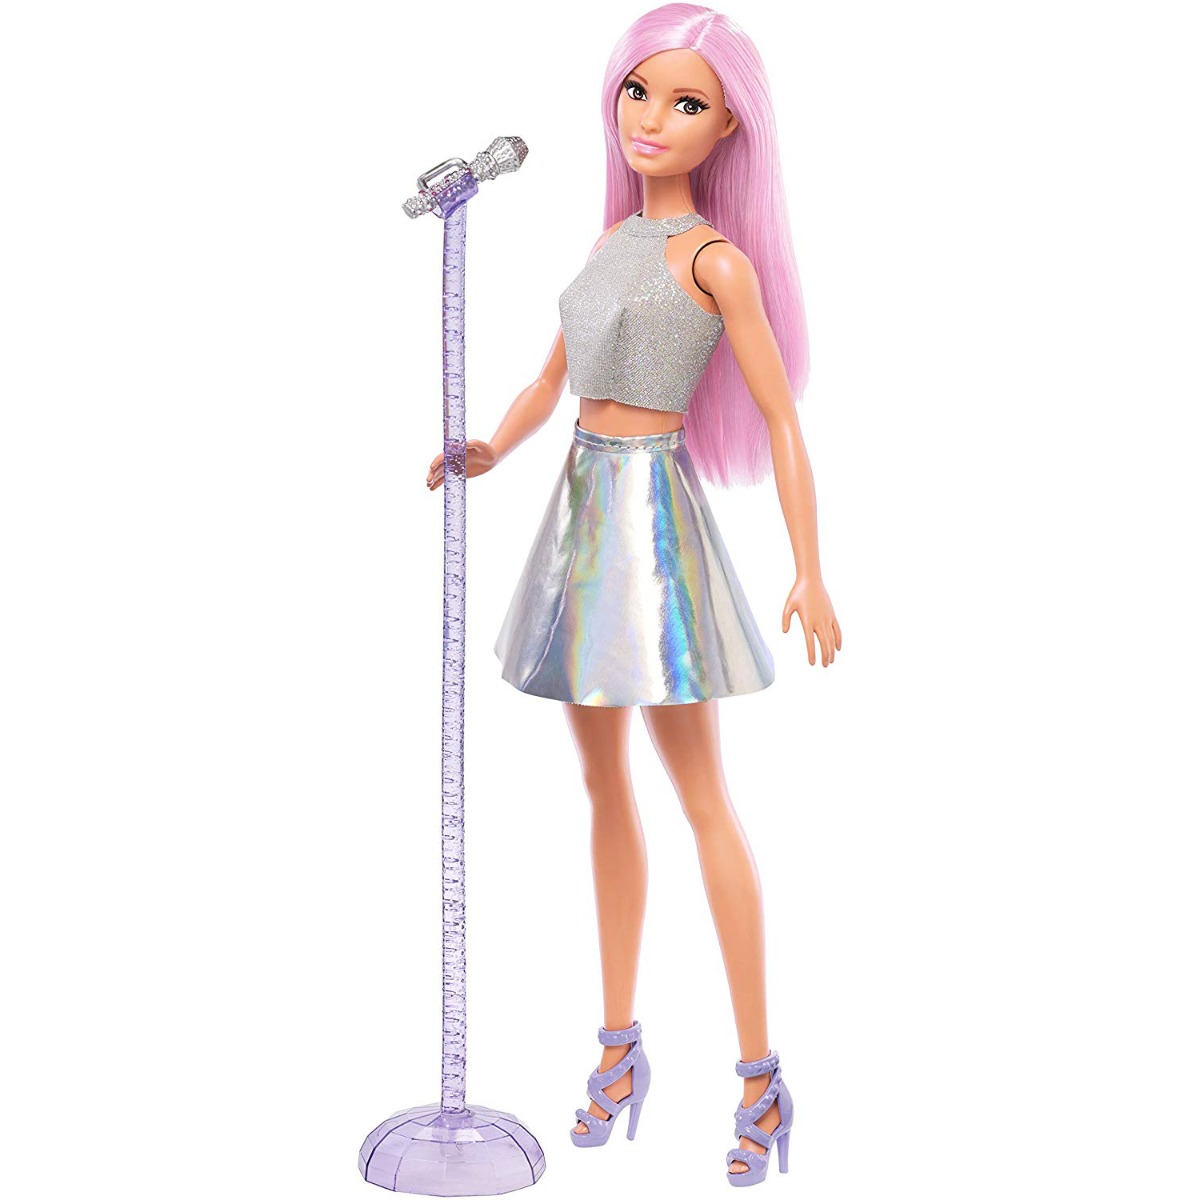 Papusa Barbie Career, Pop Star, FXN98 Barbie imagine 2022 protejamcopilaria.ro